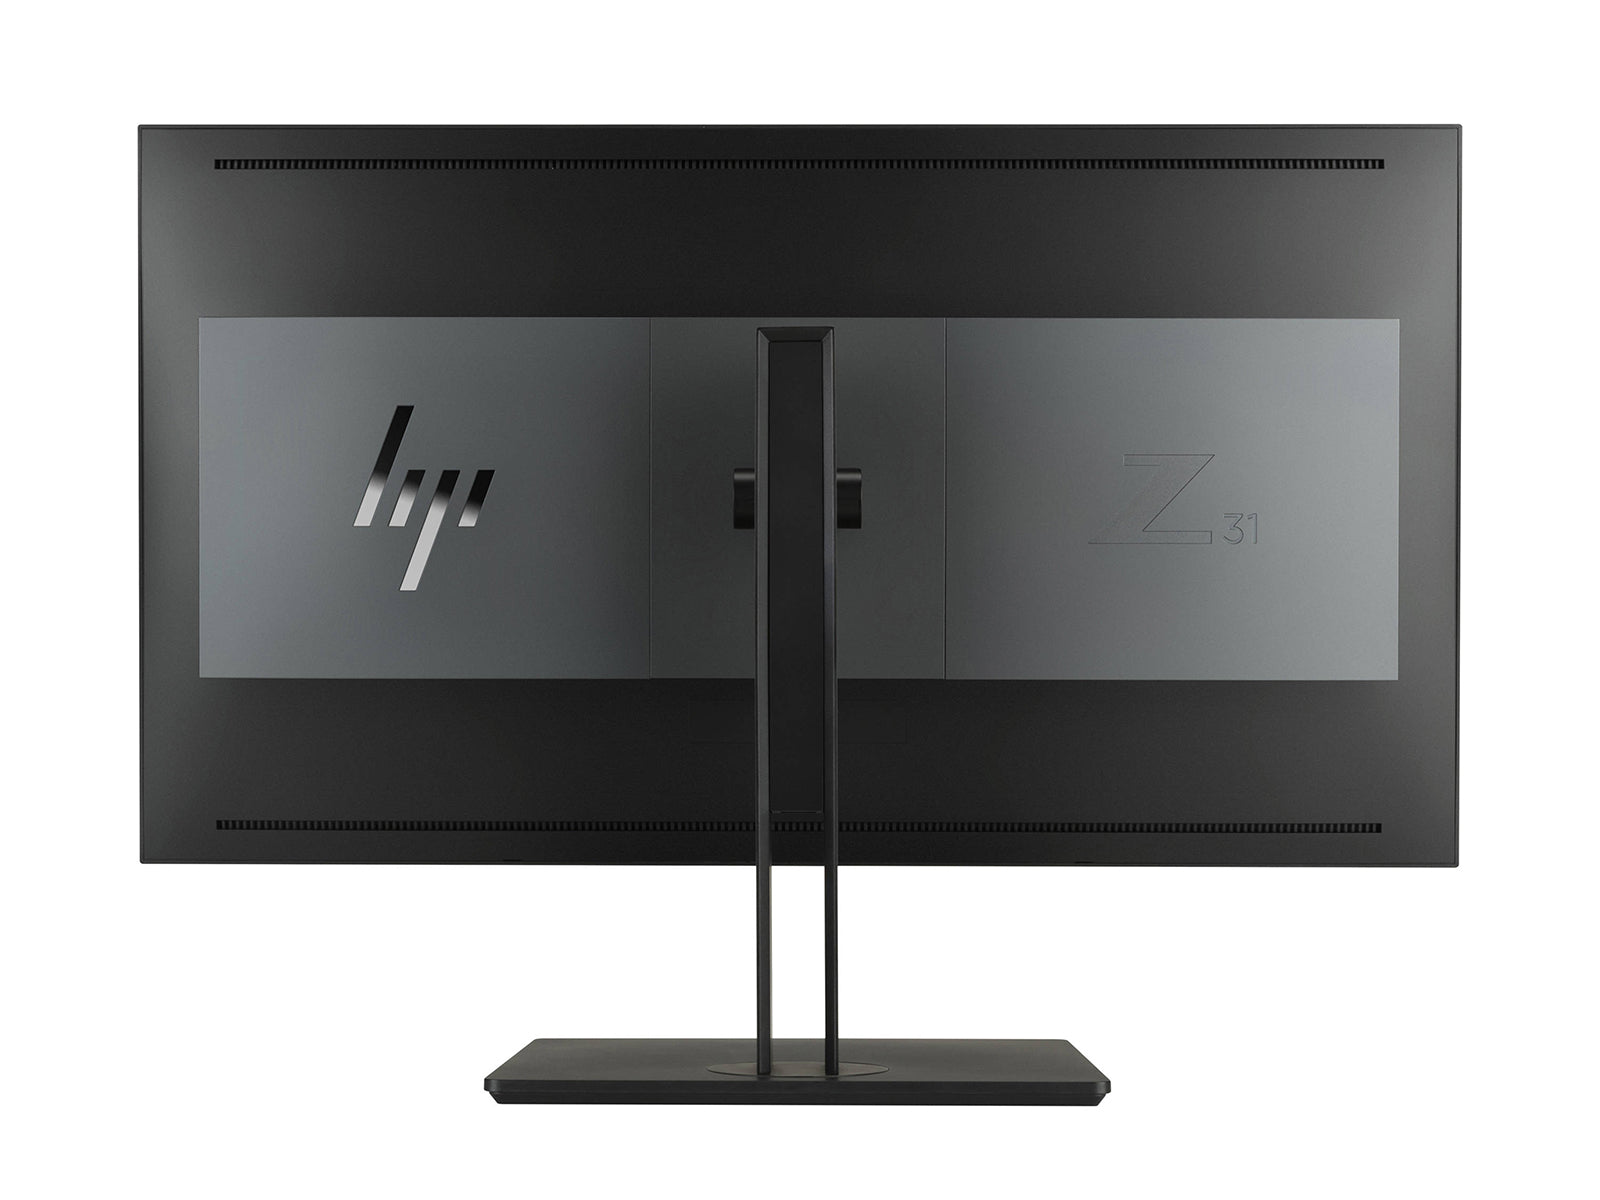 HP DreamColor Z31x 31" 4K 4096 x 2160 Color LED Studio Display Monitor (Z4Y82A8#ABA) Monitors.com 